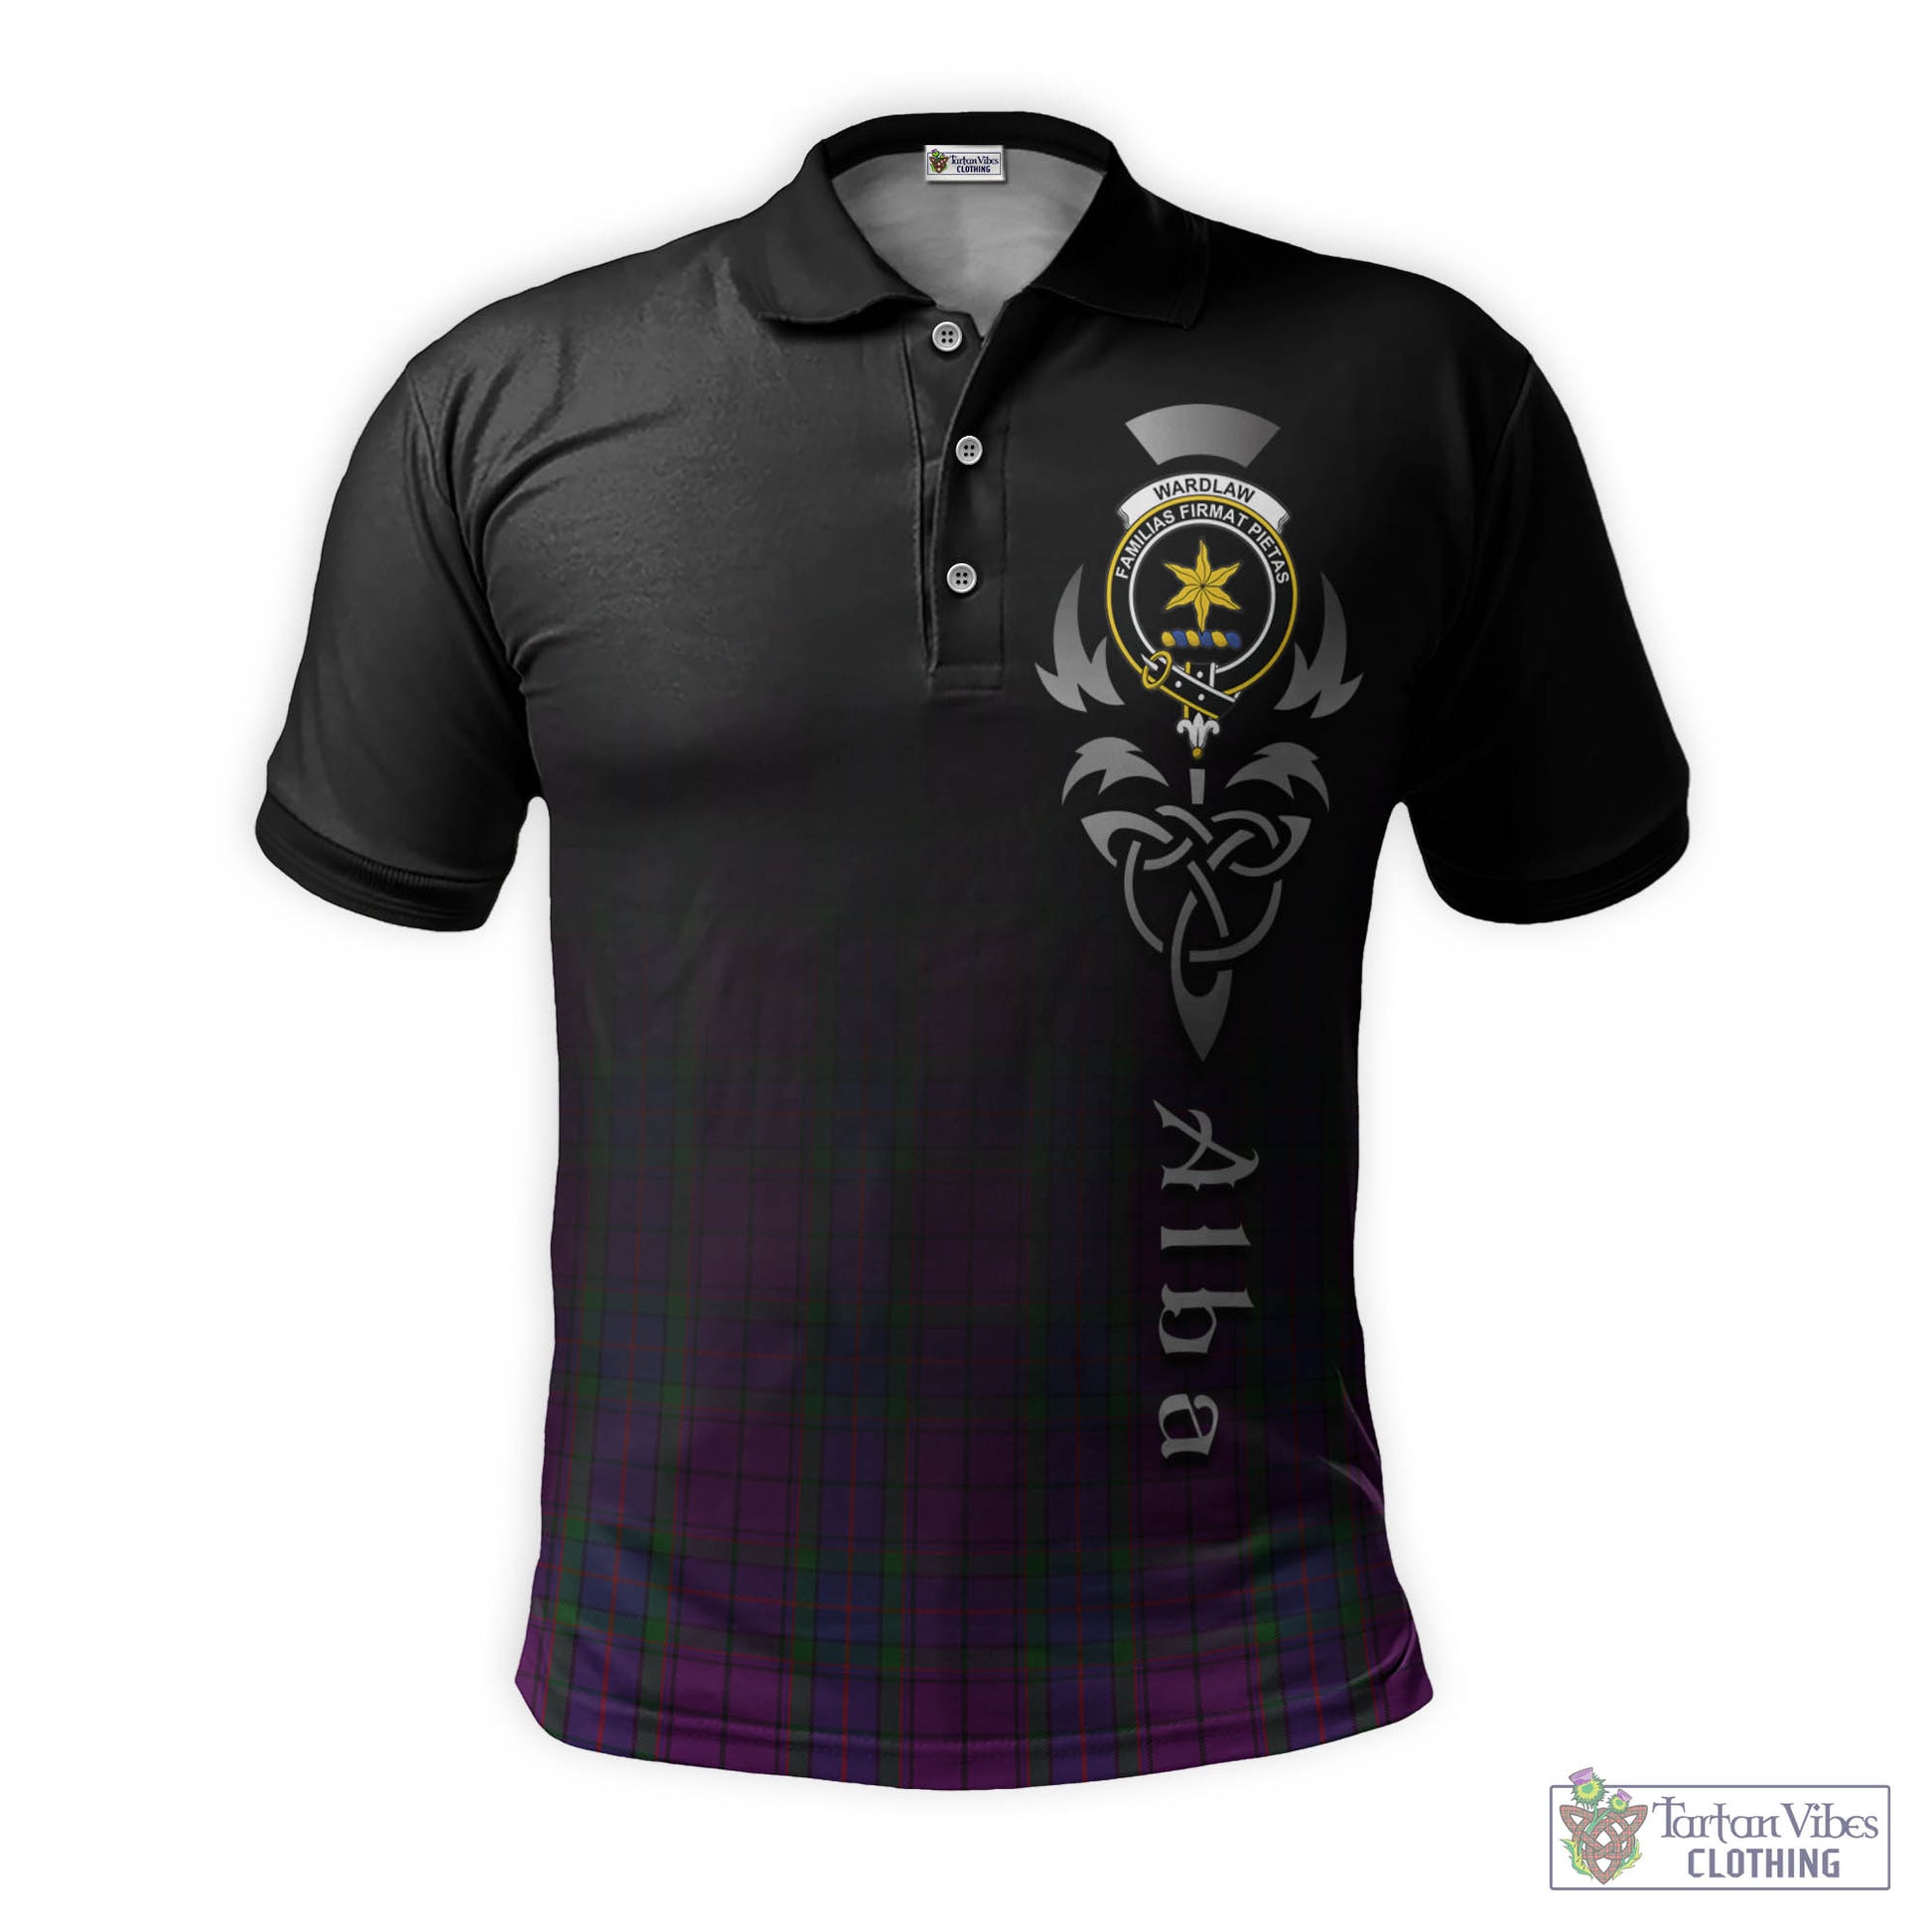 Tartan Vibes Clothing Wardlaw Tartan Polo Shirt Featuring Alba Gu Brath Family Crest Celtic Inspired